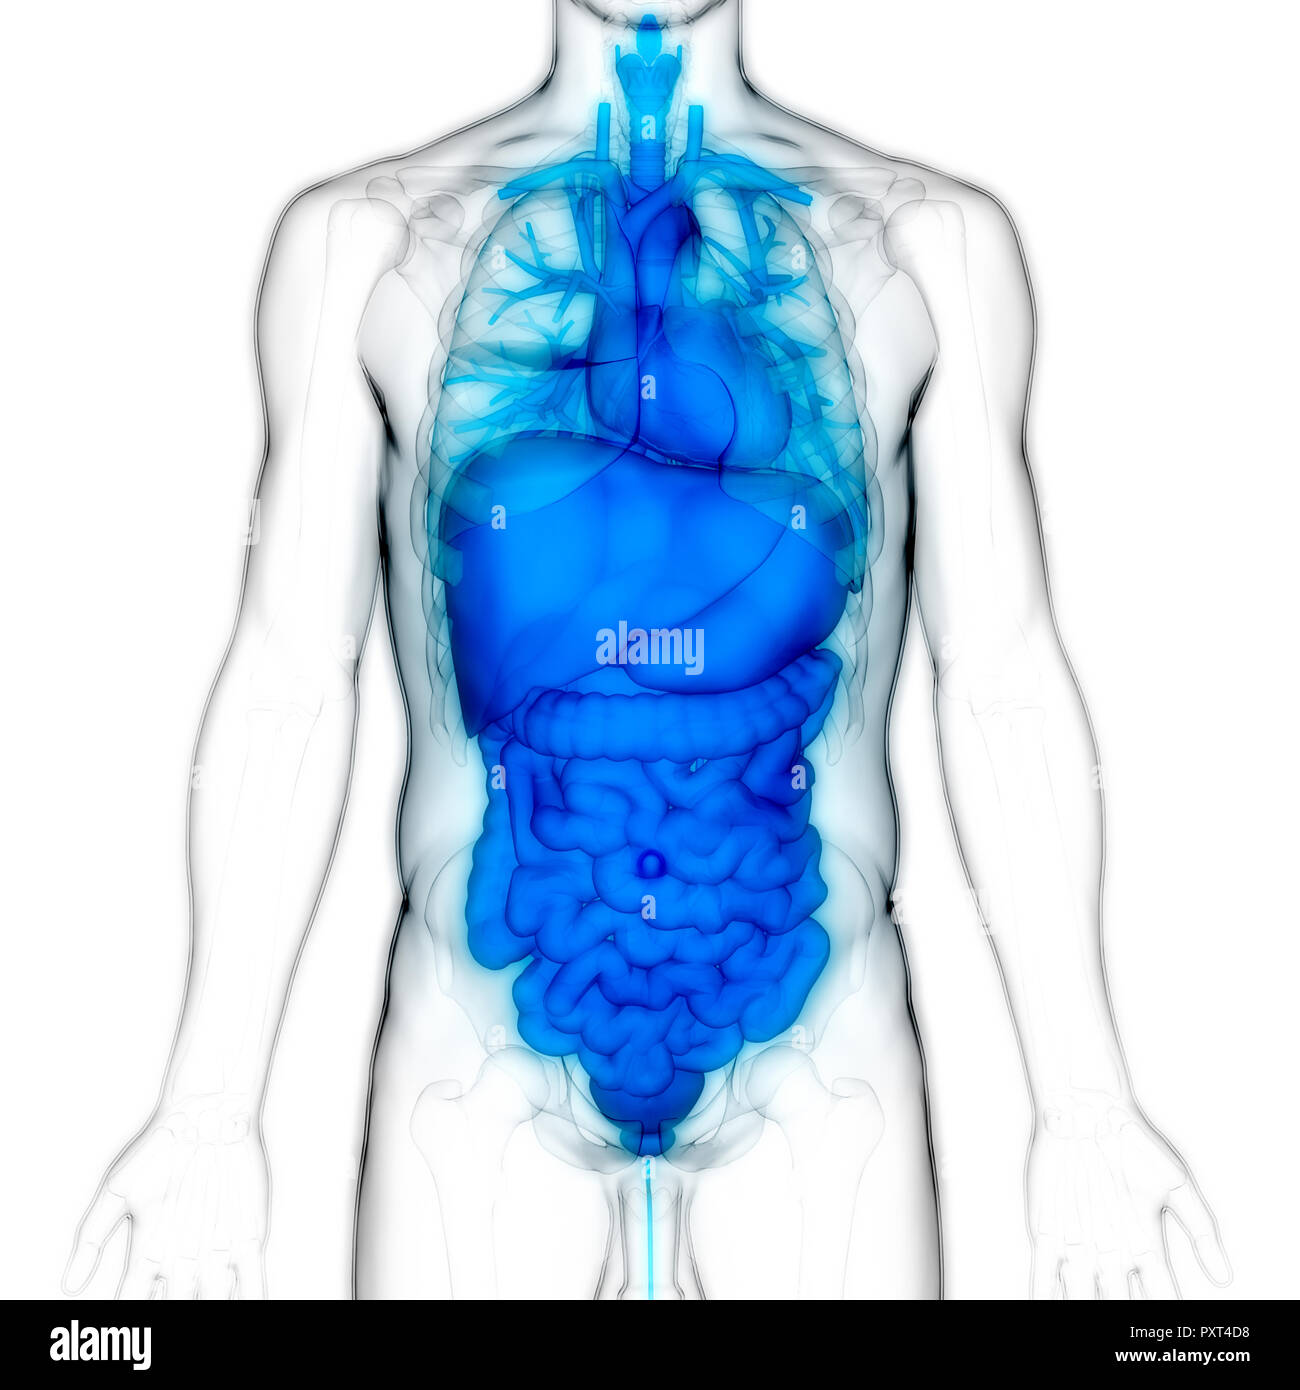 Human Body Organs Anatomy Stock Photo - Alamy